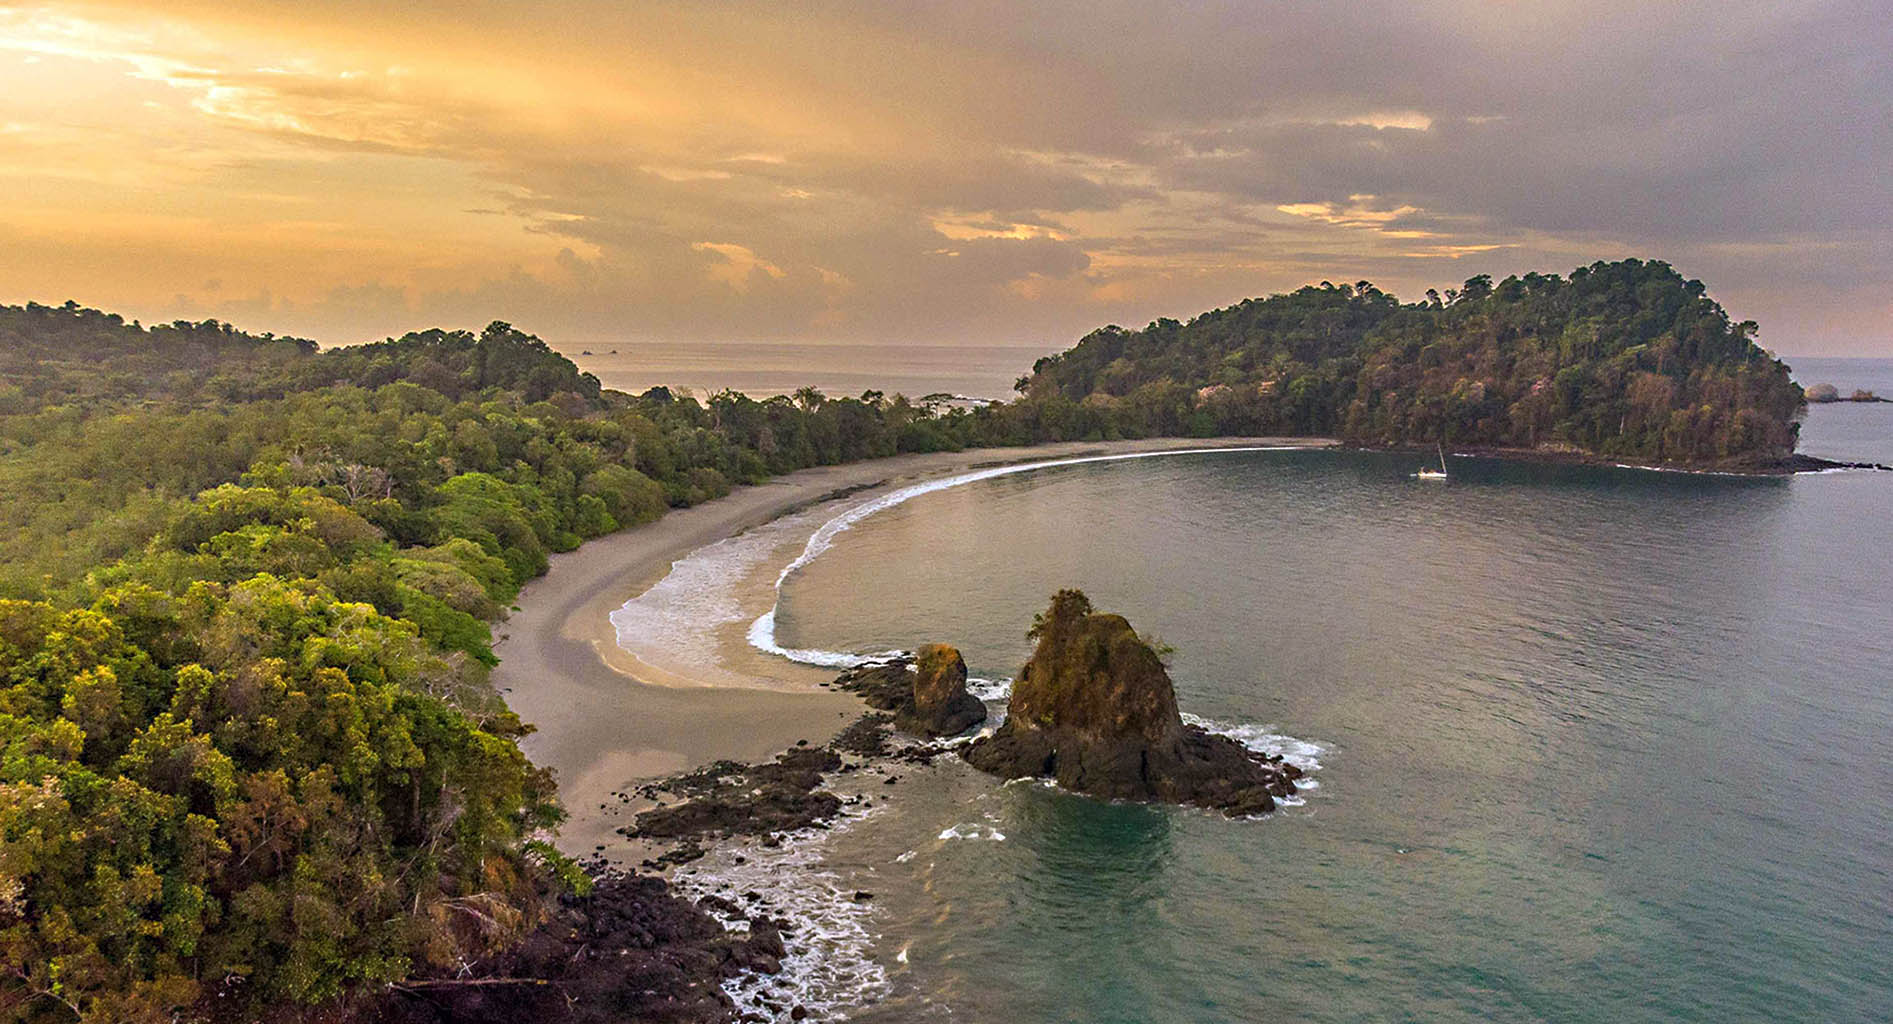 Manuel Antonio National Park is on the Panama Posse route